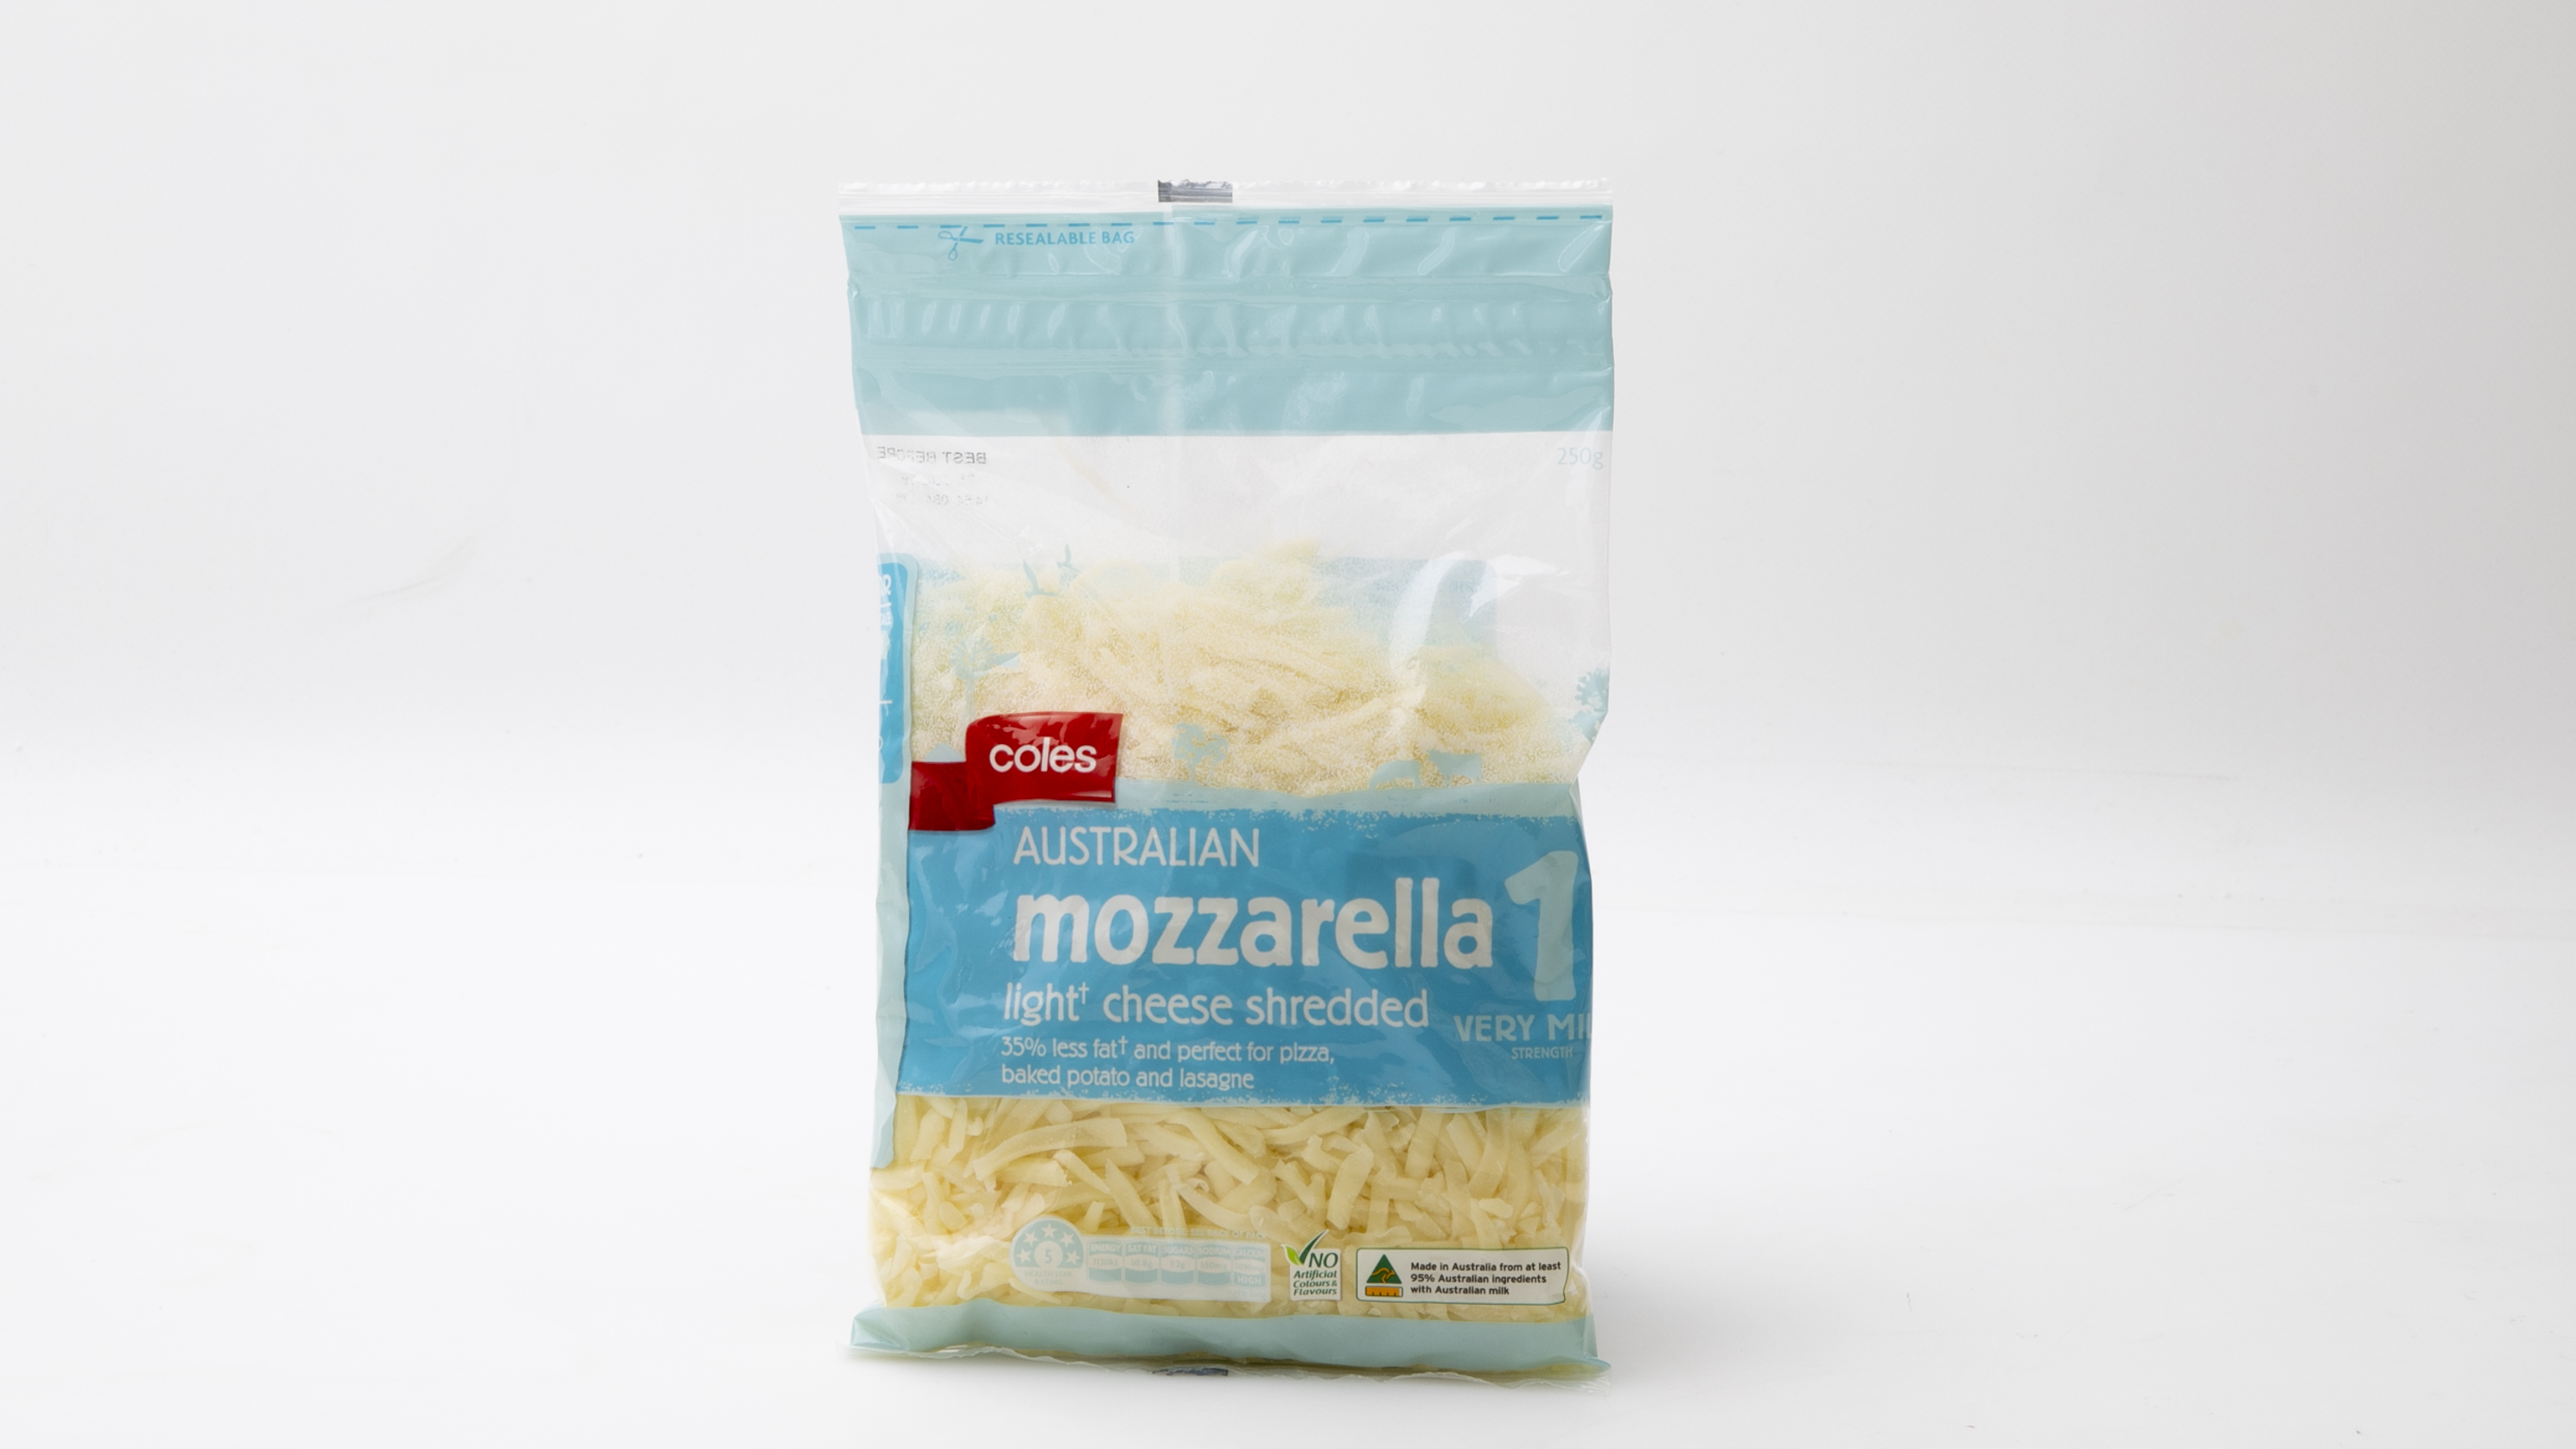 Coles Australian Mozzarella Light Cheese Shredded carousel image